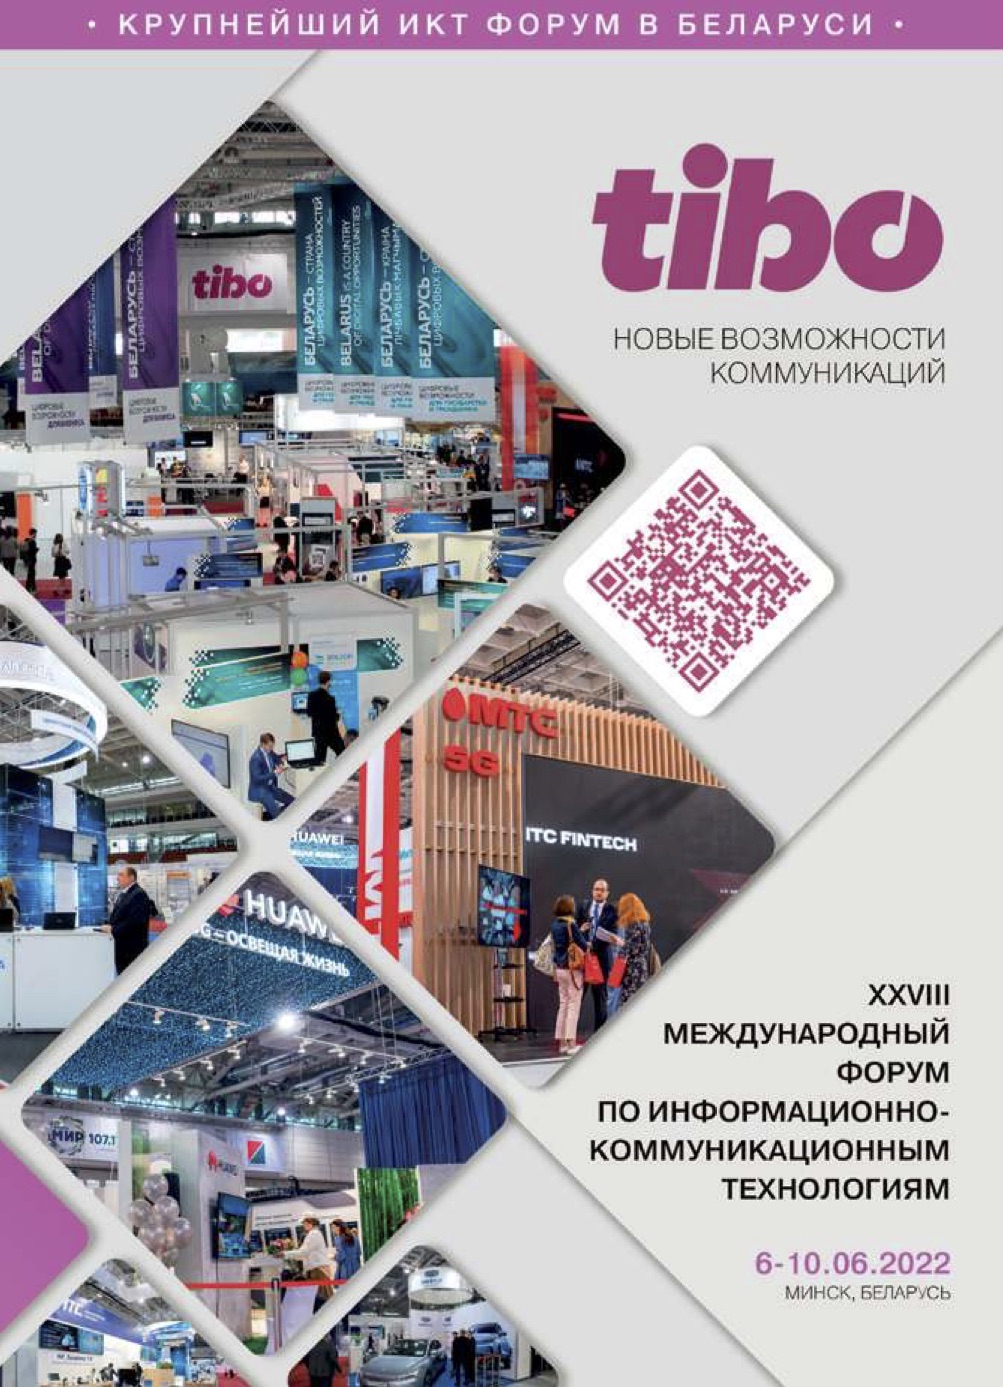 XXVIII Международный форум по информационно-коммуникационным технологиям «TIBO-2022»